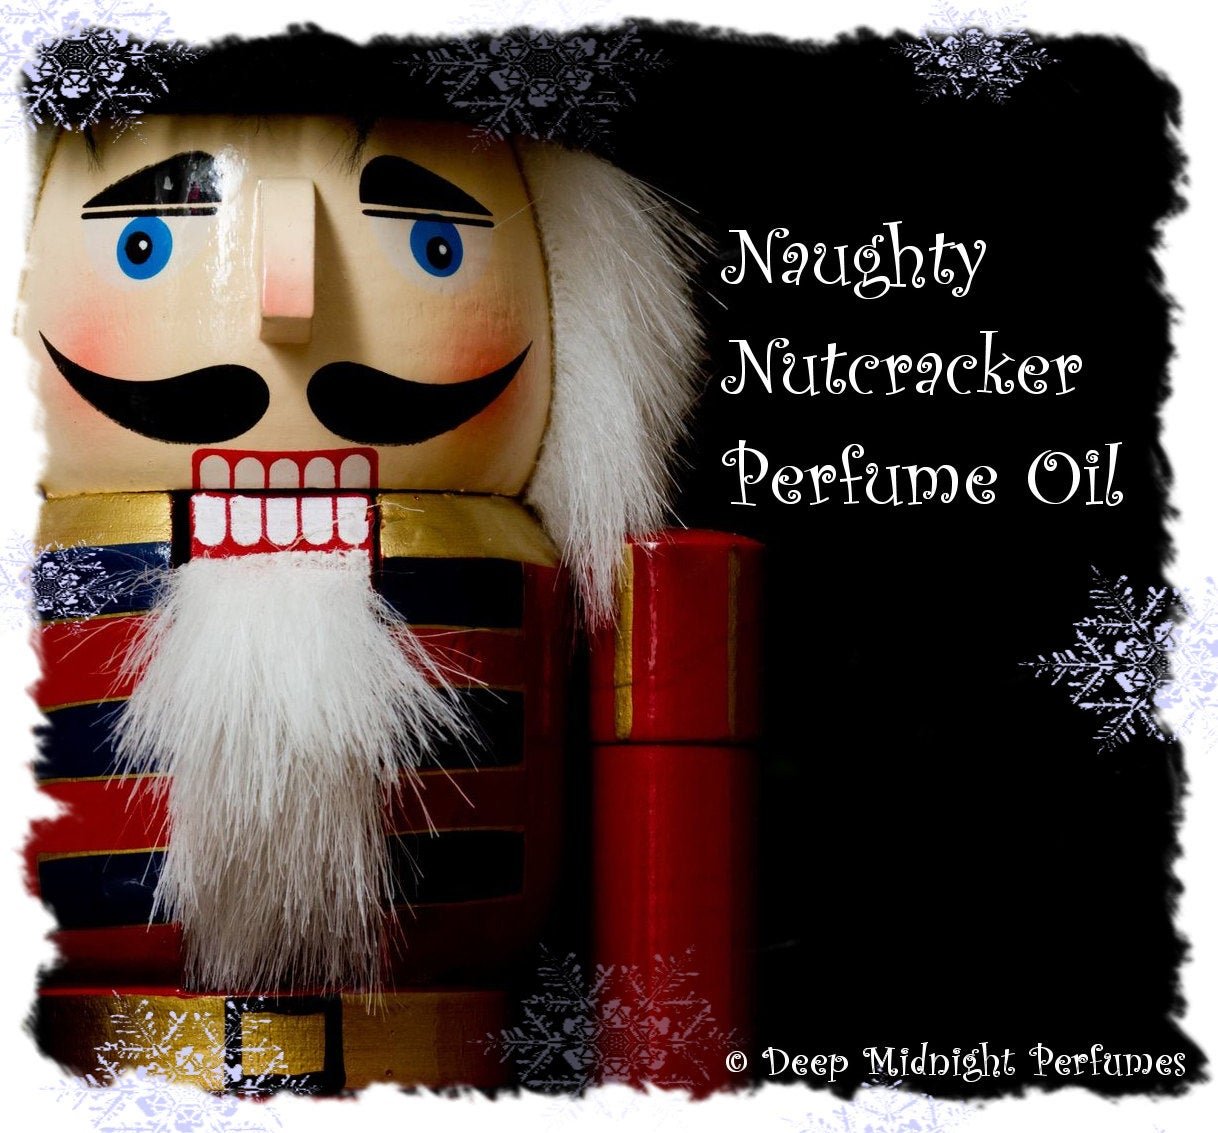 Naughty Nutcracker™ Perfume Oil - Rich Chocolate Fudge, Candied Walnuts, Rum, Grand Marnier Liqueur - Christmas Perfume - Holiday Scent